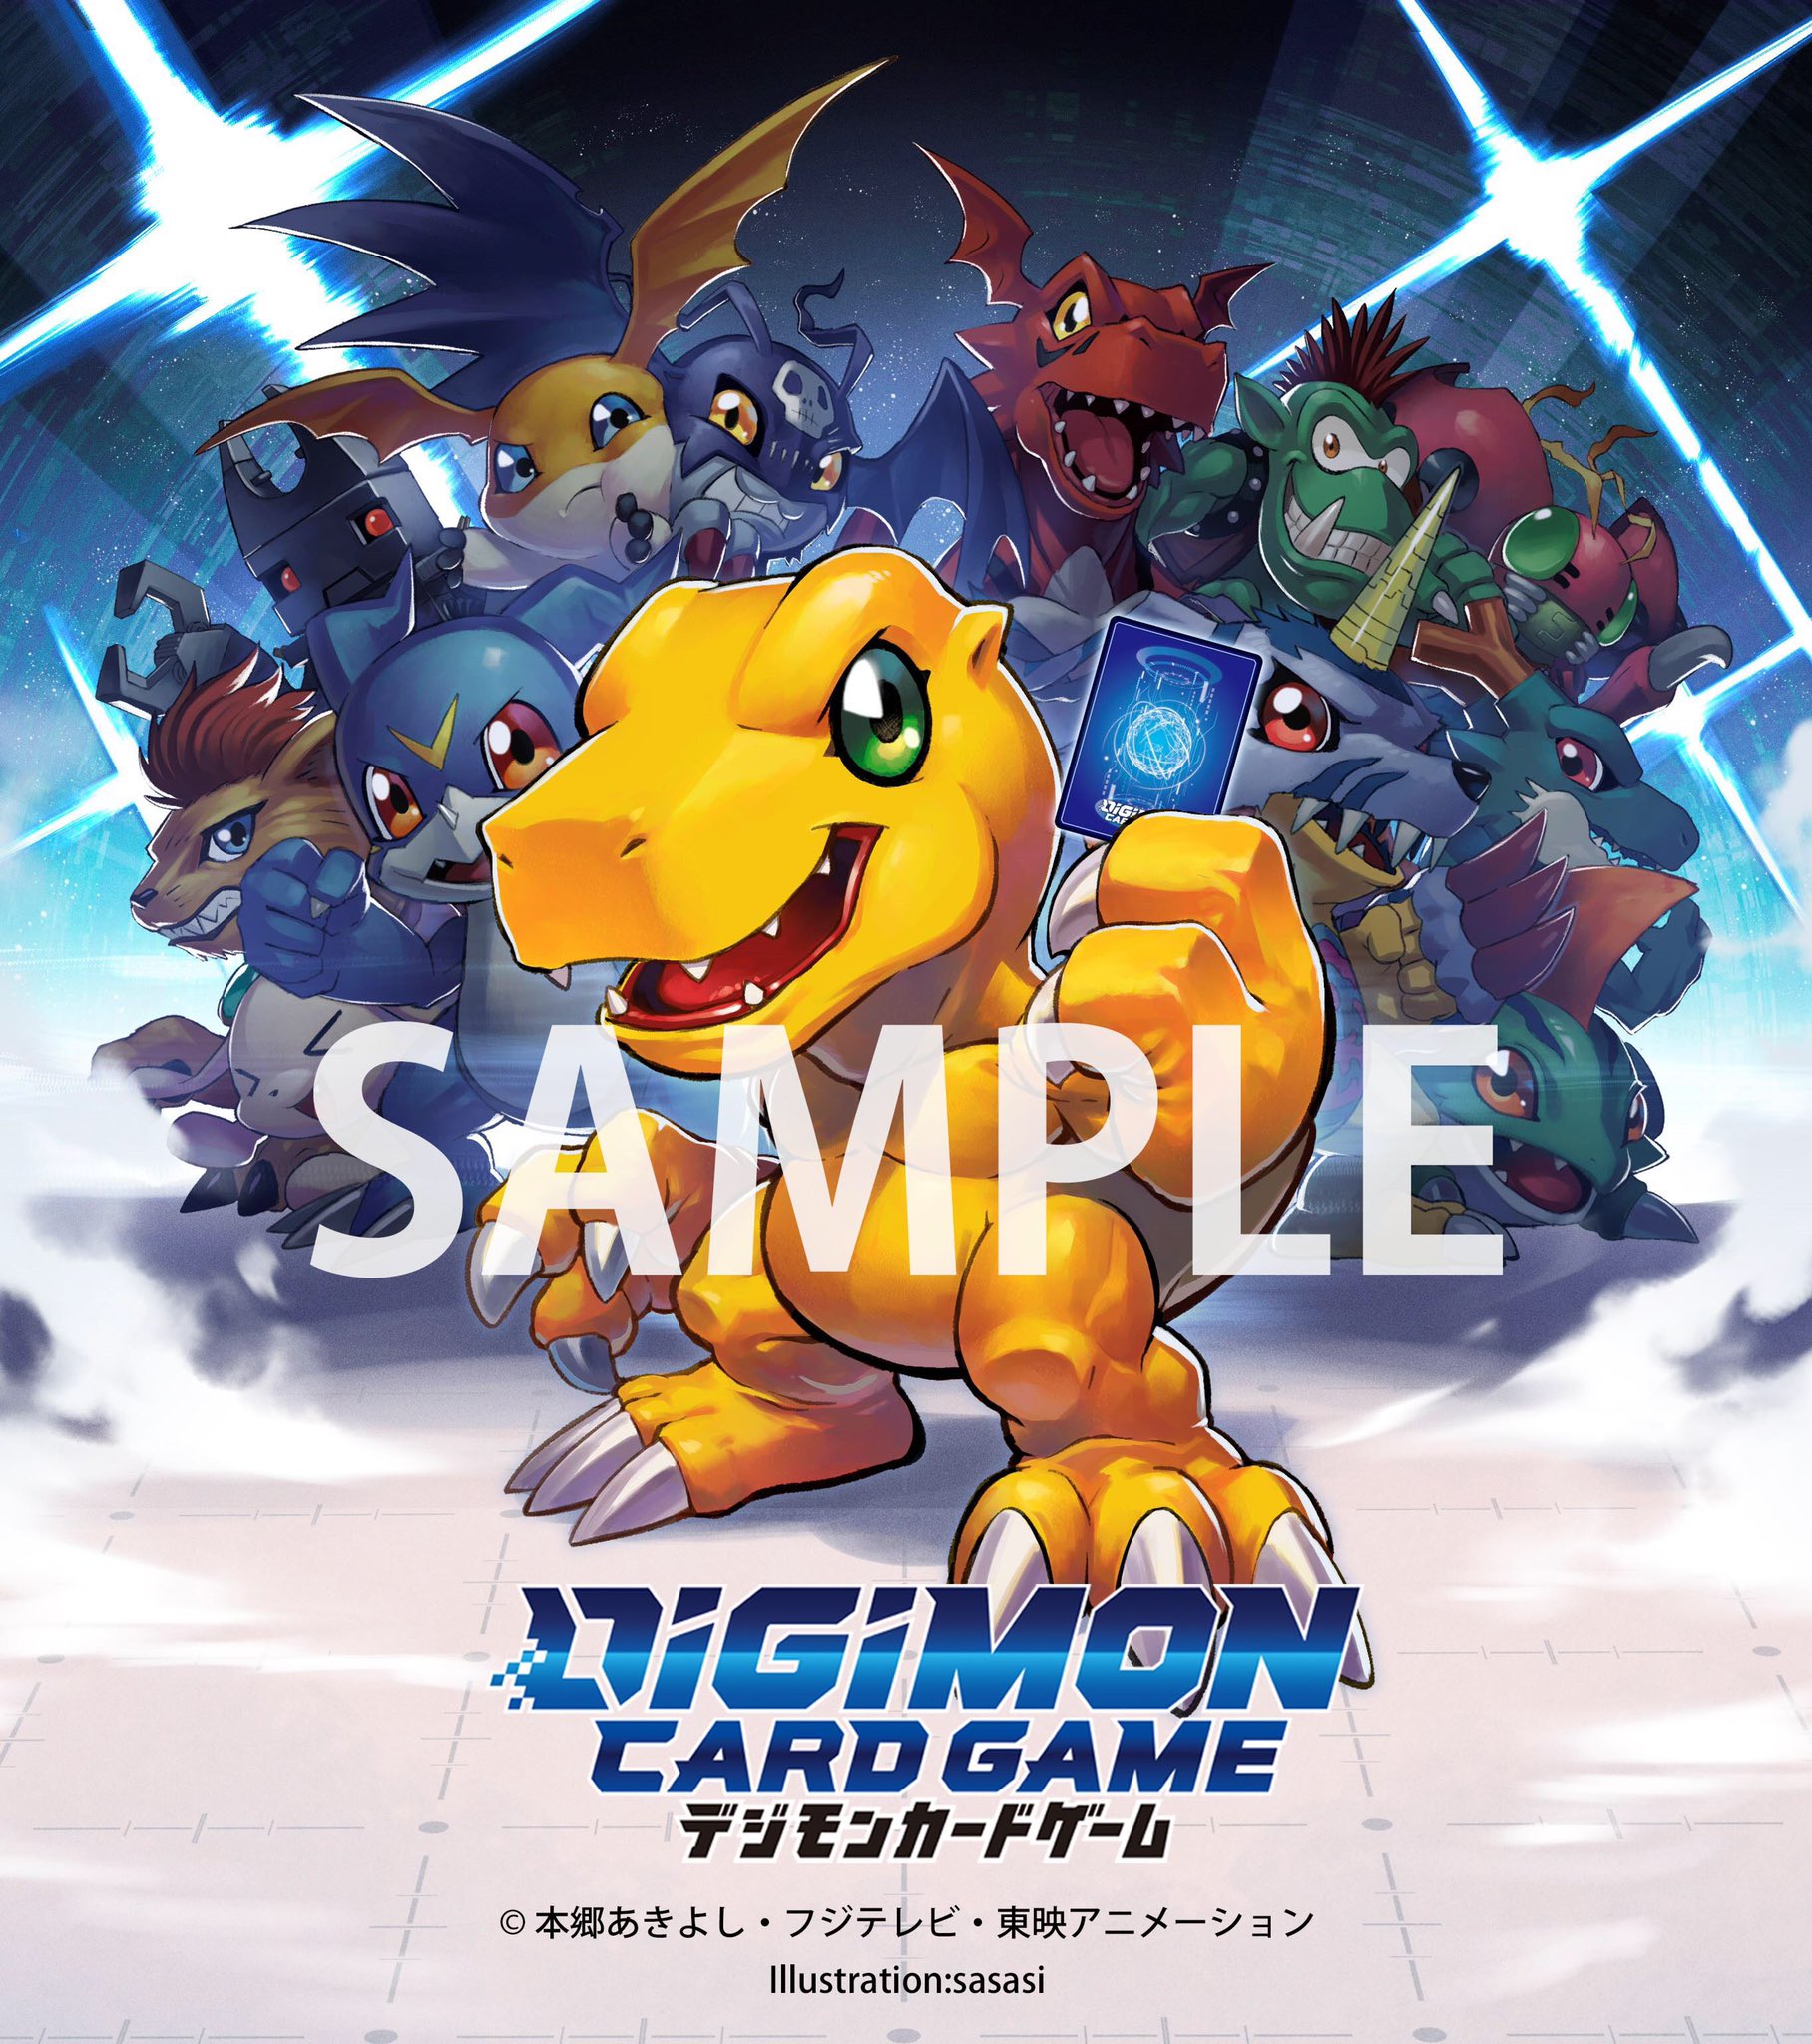 Digimon Card Game Wallpaper - carrotapp